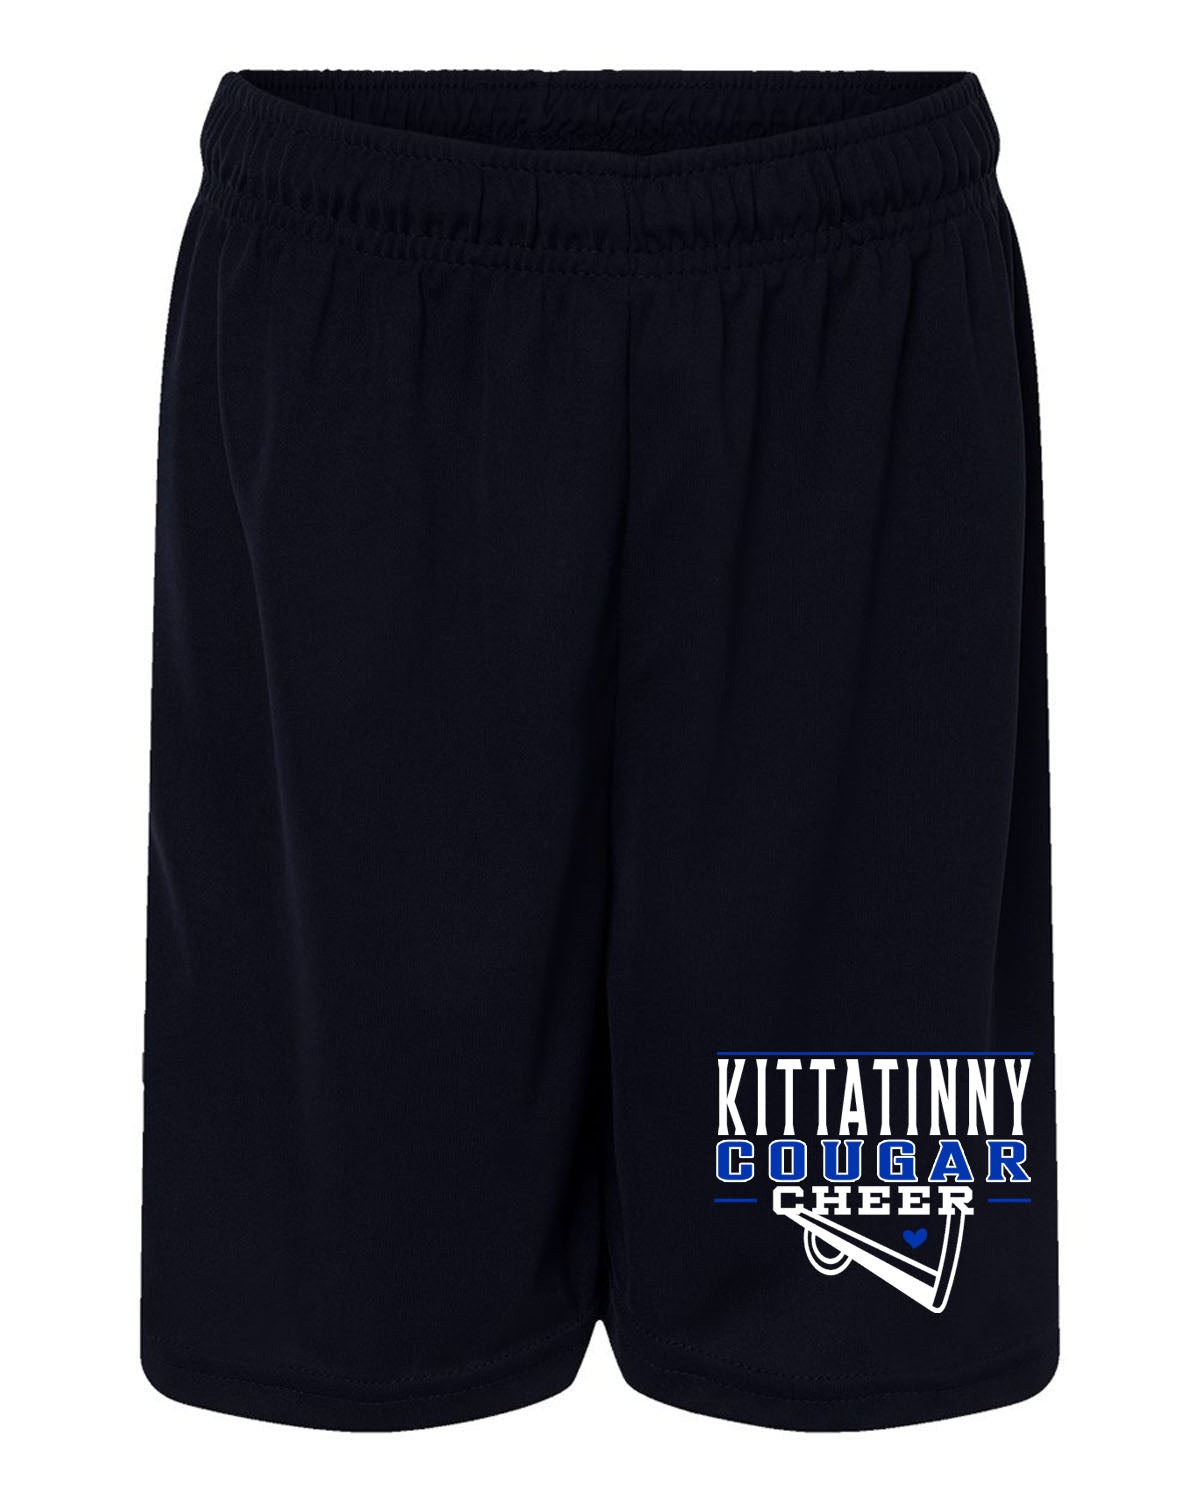 Kittatinny Cheer Performance Shorts Design 11